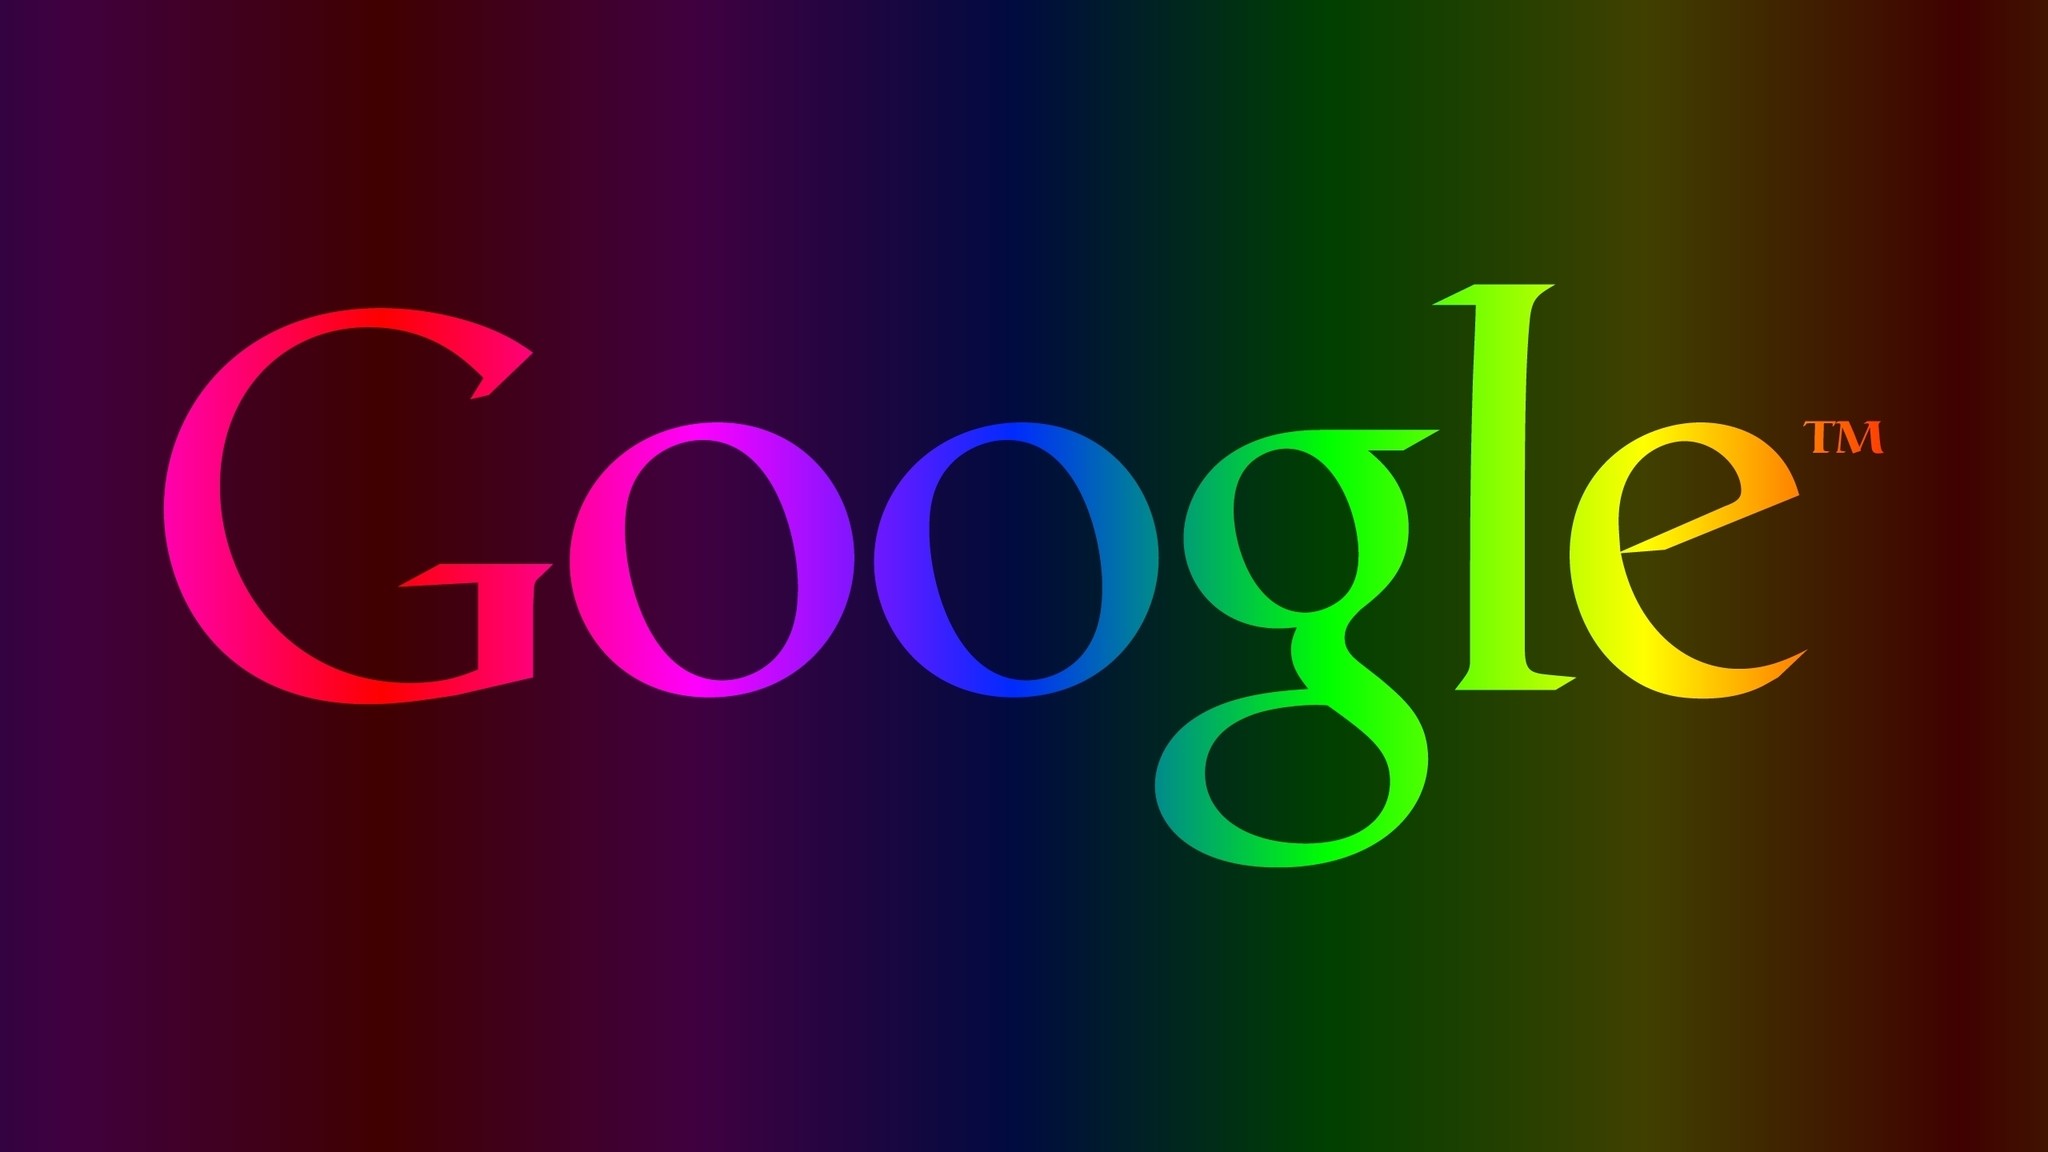 2048x1152 Description: Download Spectrum google rainbows logos wallpaper/desktop  background in  HD & Widescreen resolution.